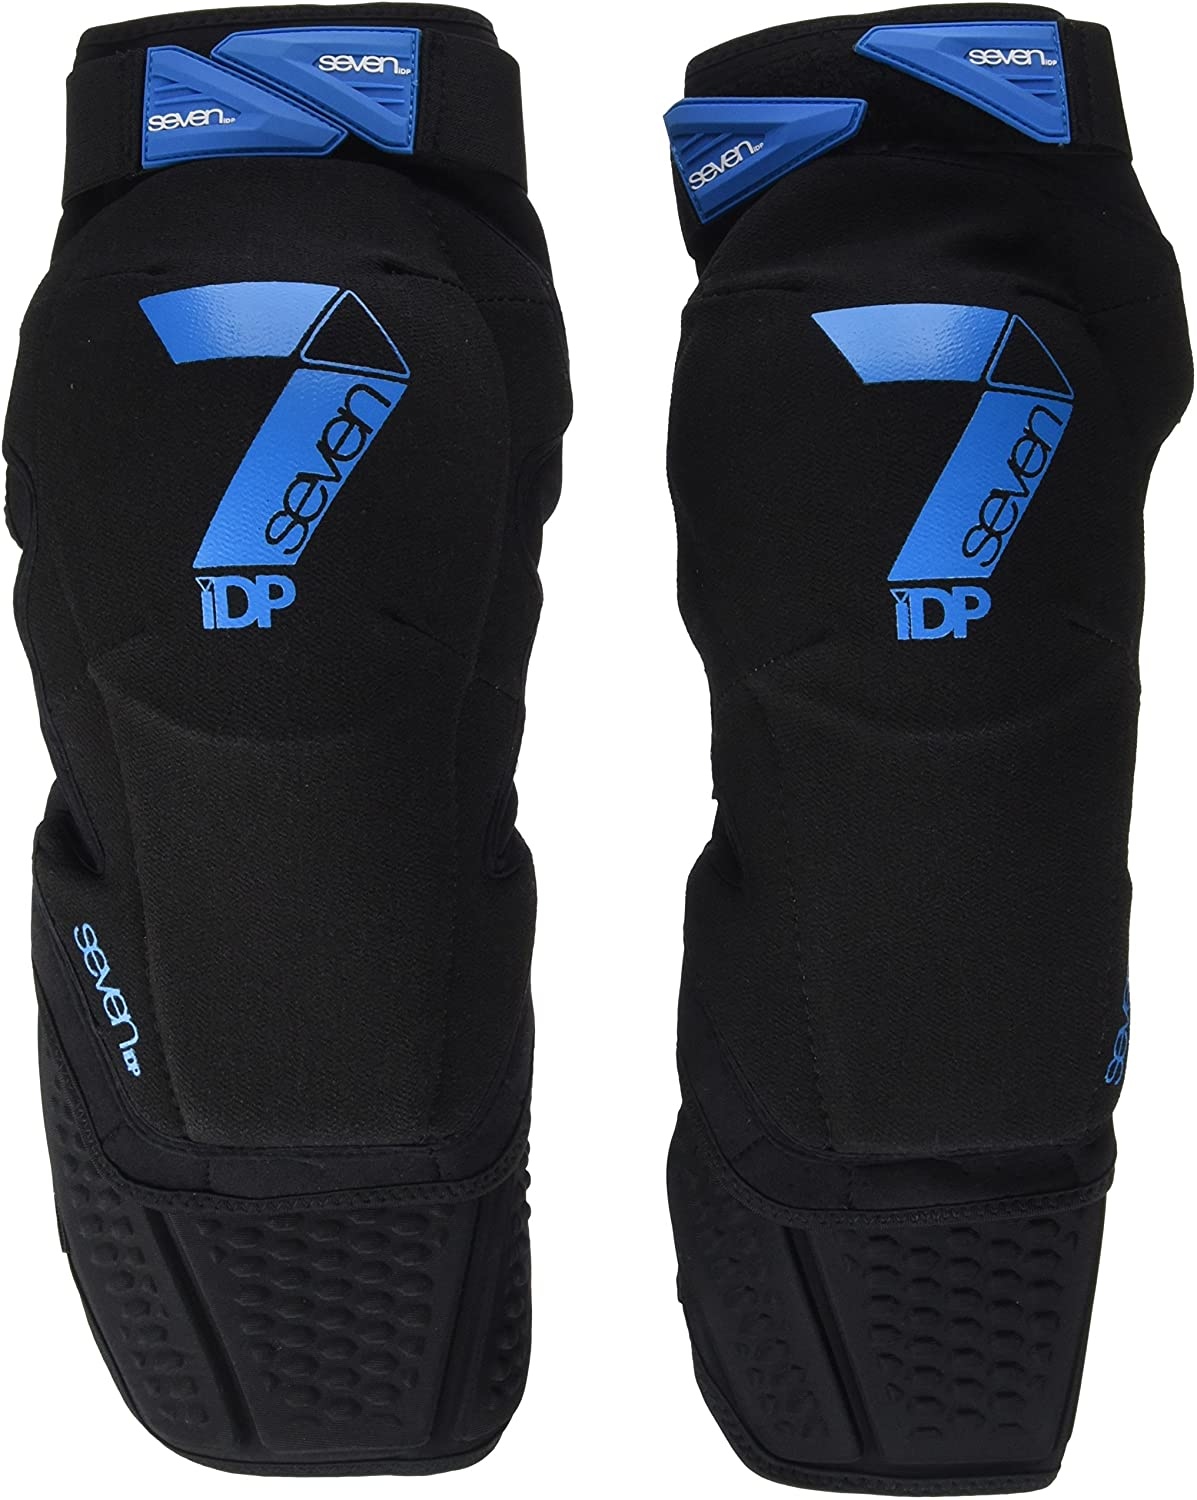 7iDP Flex Knee Shin Protective Gear 